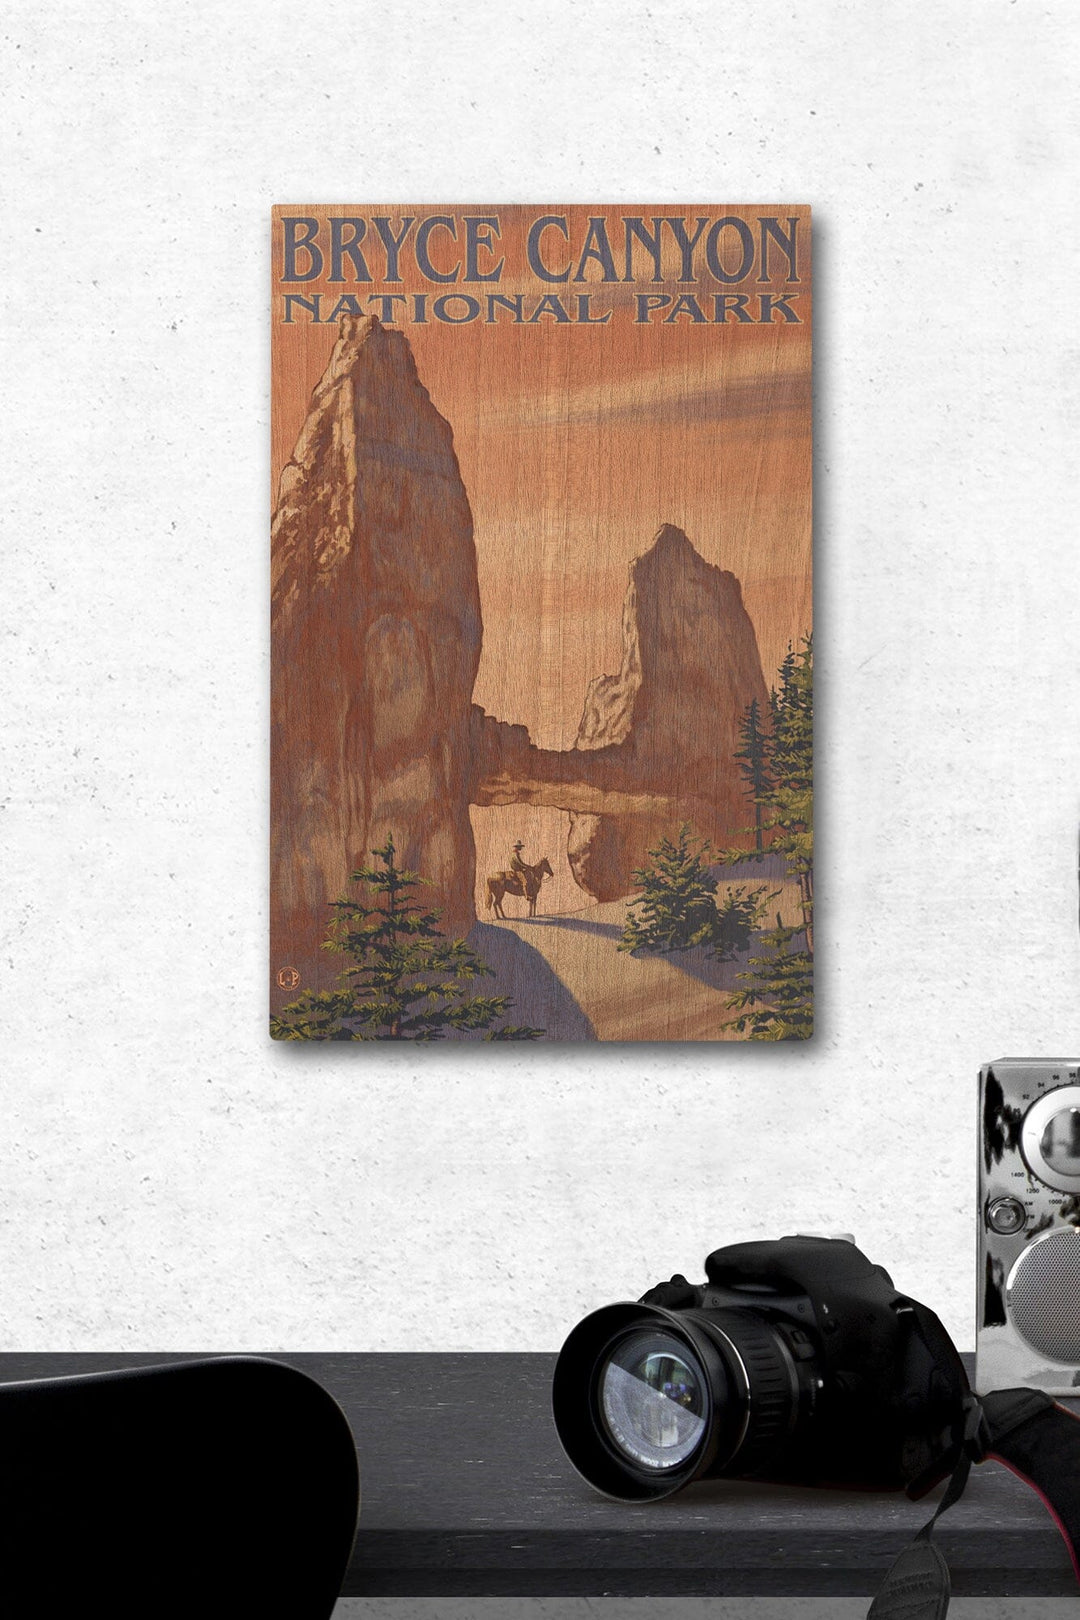 Bryce Canyon National Park, Utah, Tower Bridge, Painterly Series, Lantern Press Artwork, Wood Signs and Postcards Wood Lantern Press 12 x 18 Wood Gallery Print 